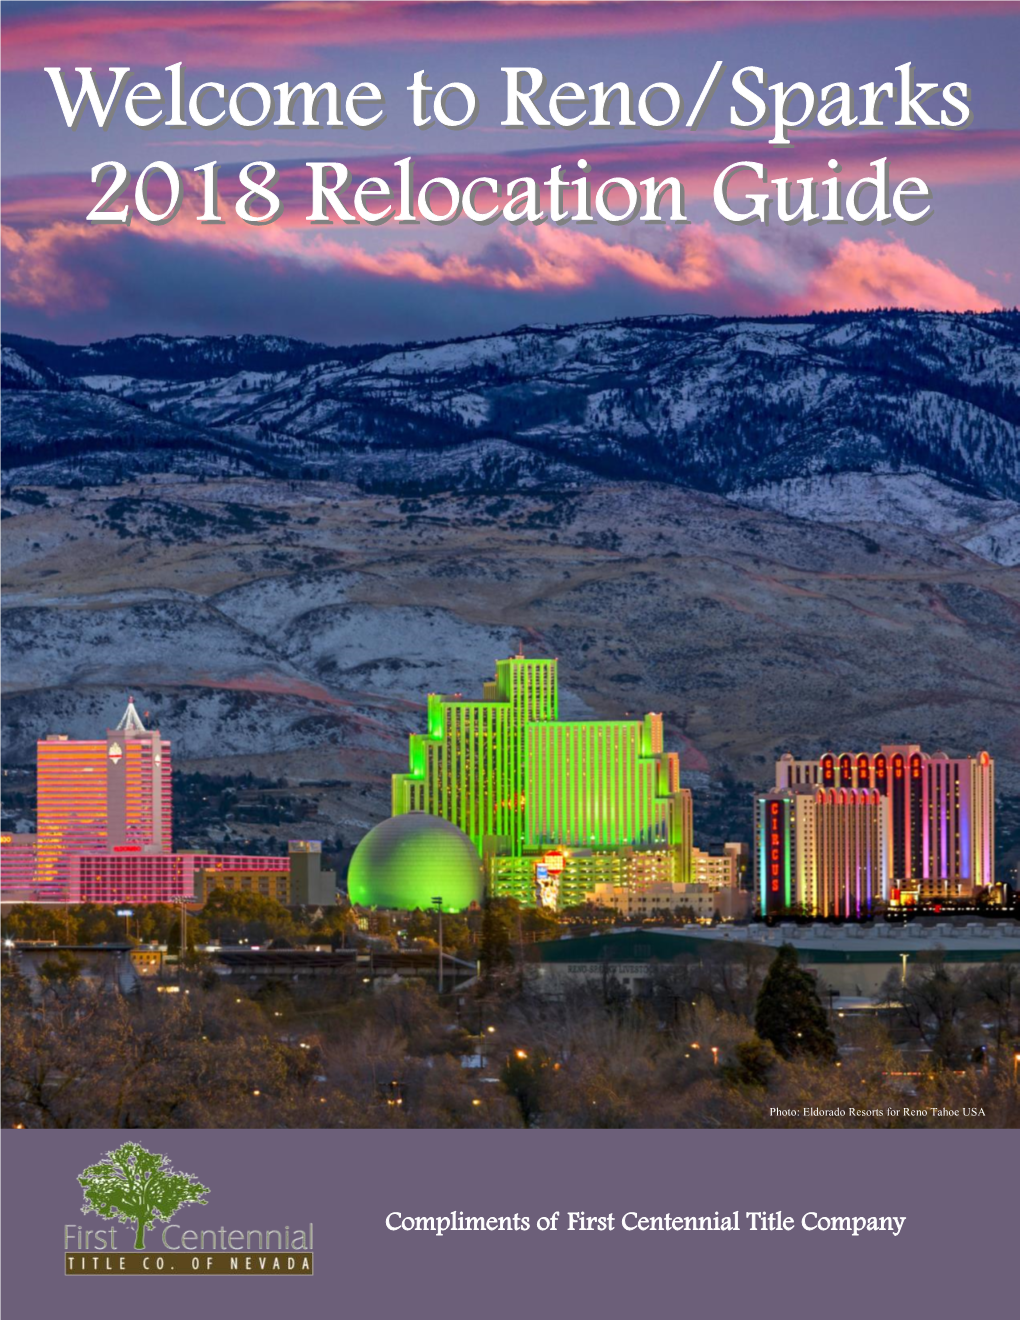 Reno/Sparks 2018 Relocation Guide